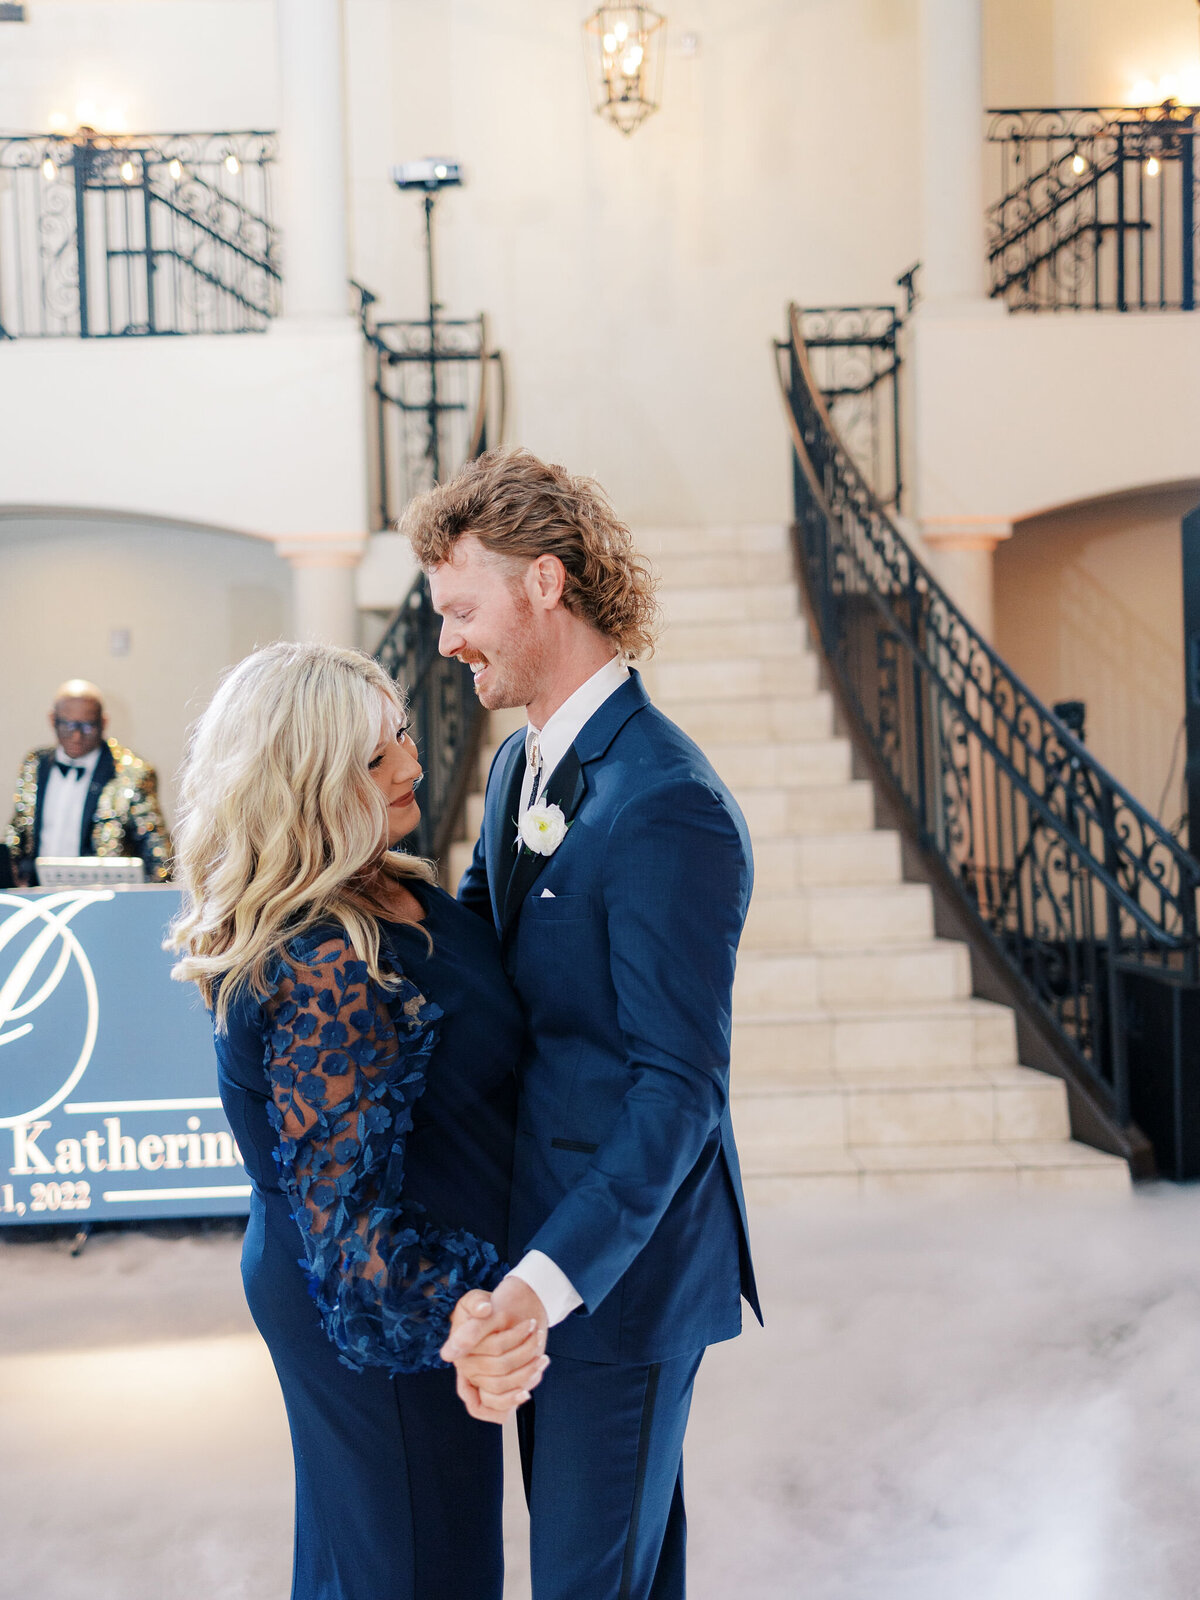 Katherine&Connor|WeddingSneaks-124